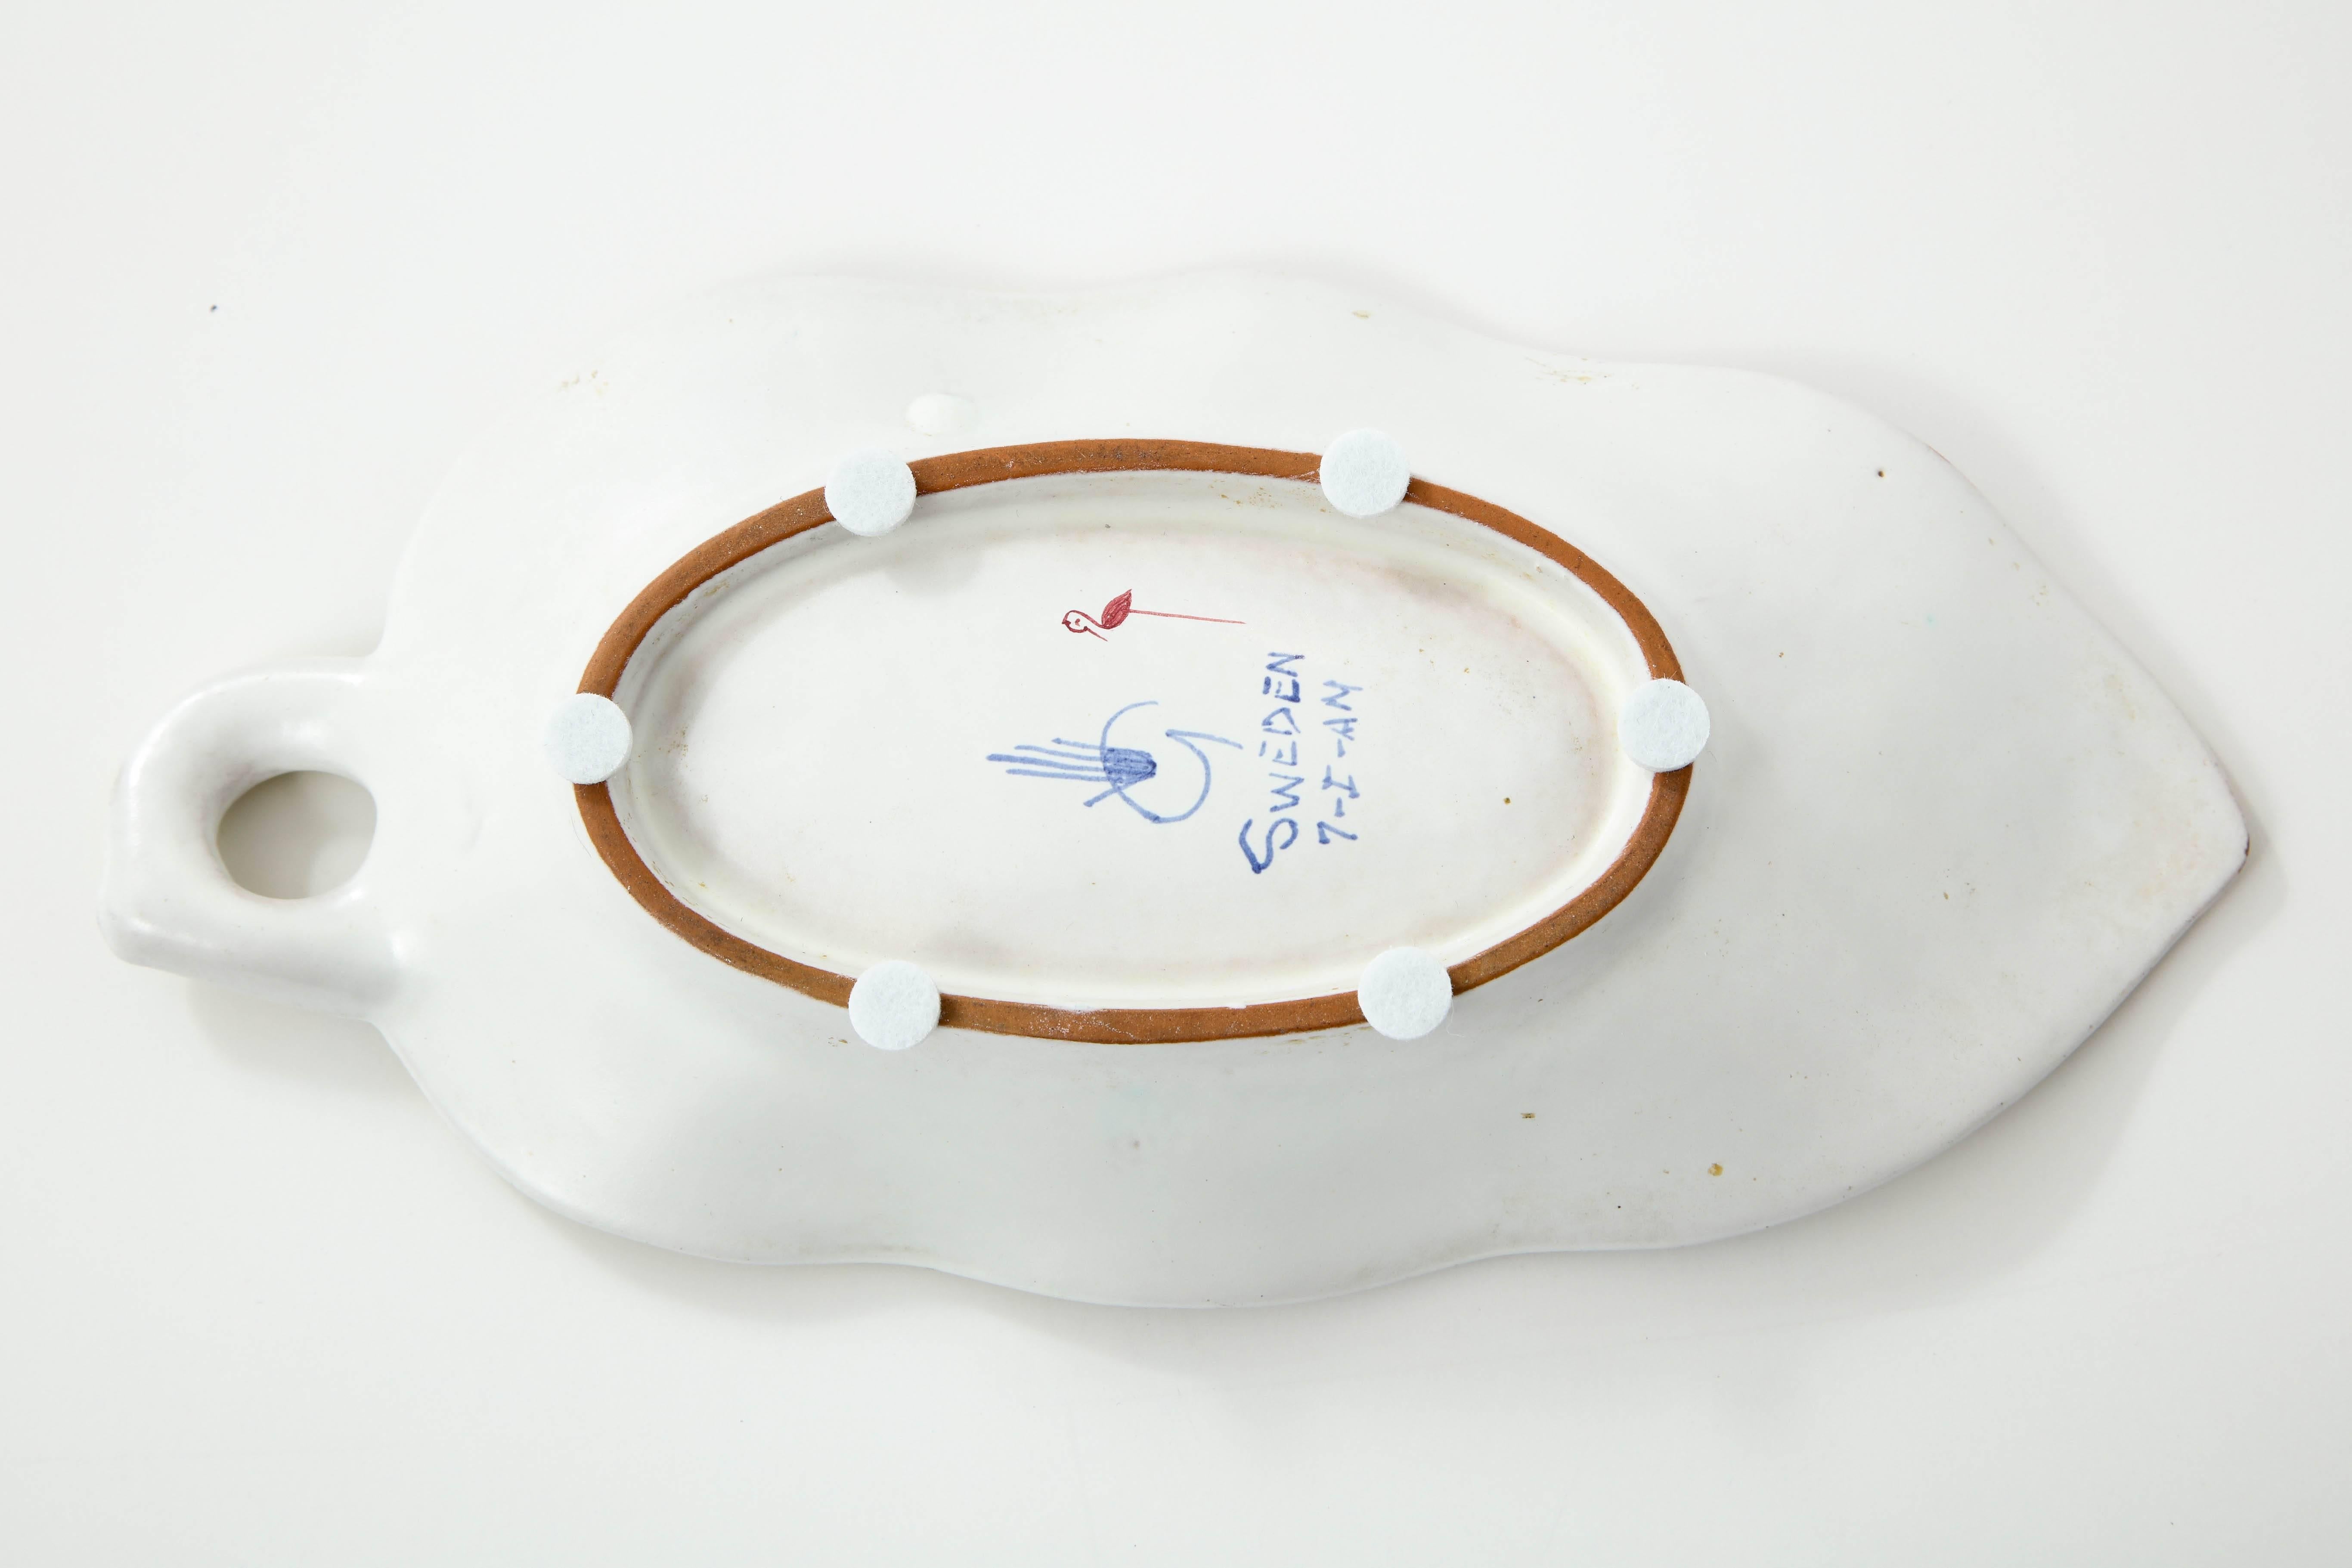 Hand-Crafted Ceramic Bowl by Stig Lindberg, Scandinavian Midcentury, Faience, circa 1950